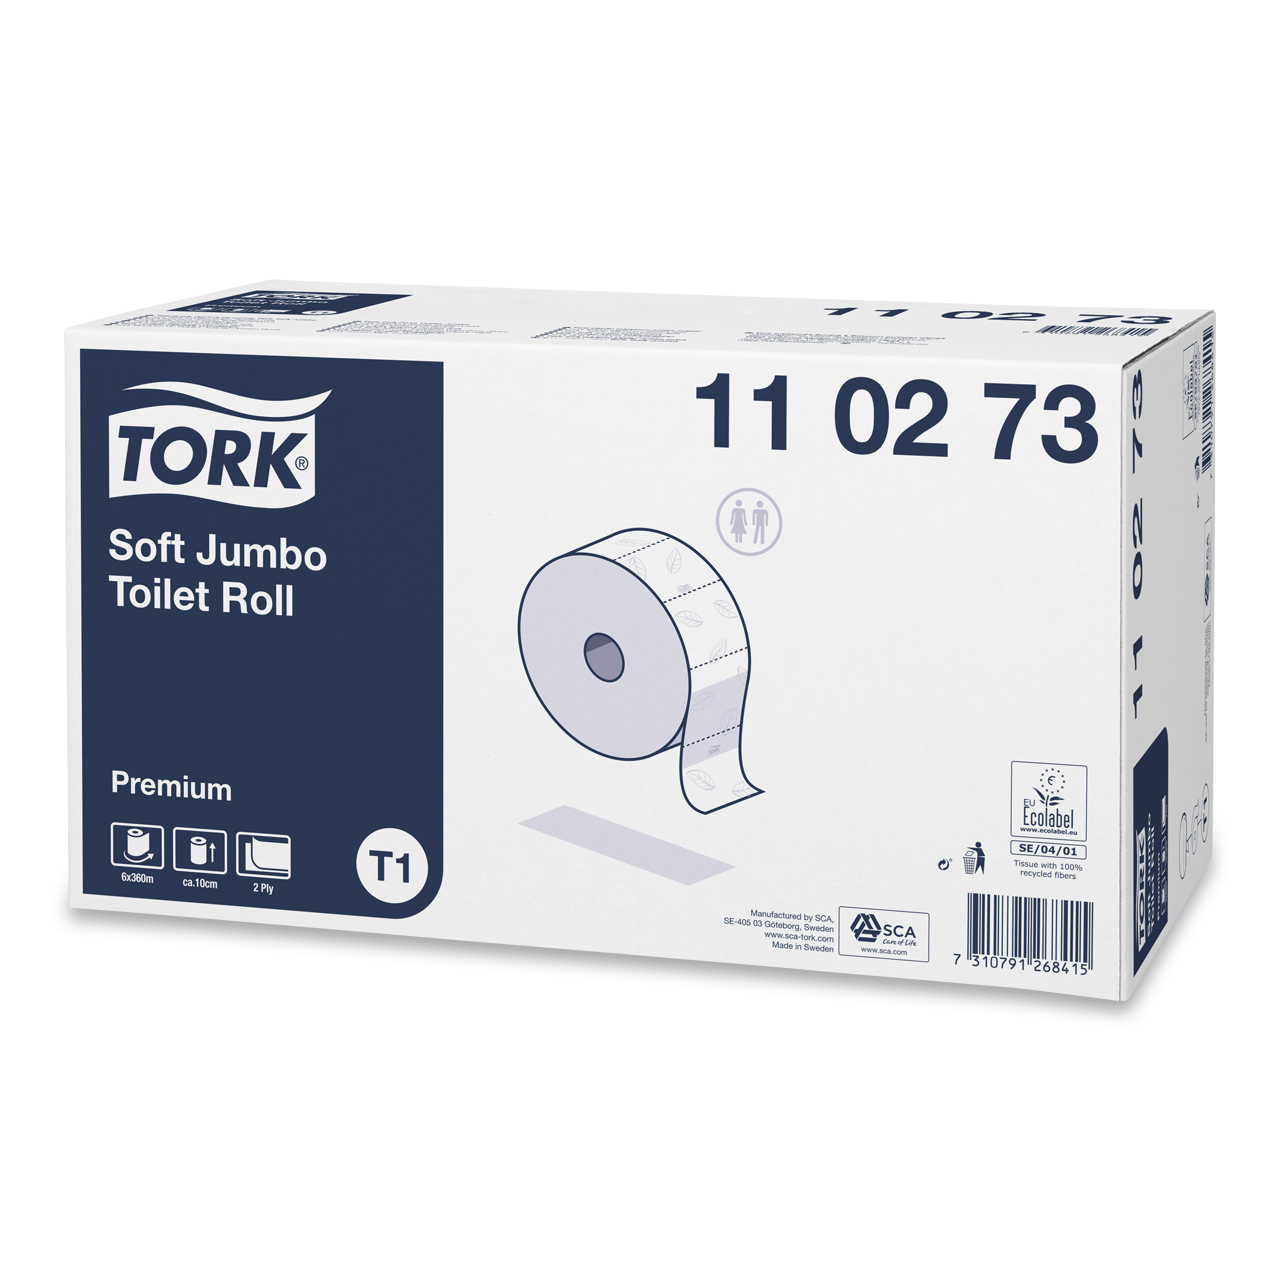 Tork Papier toilette Jumbo doux T1 Premium